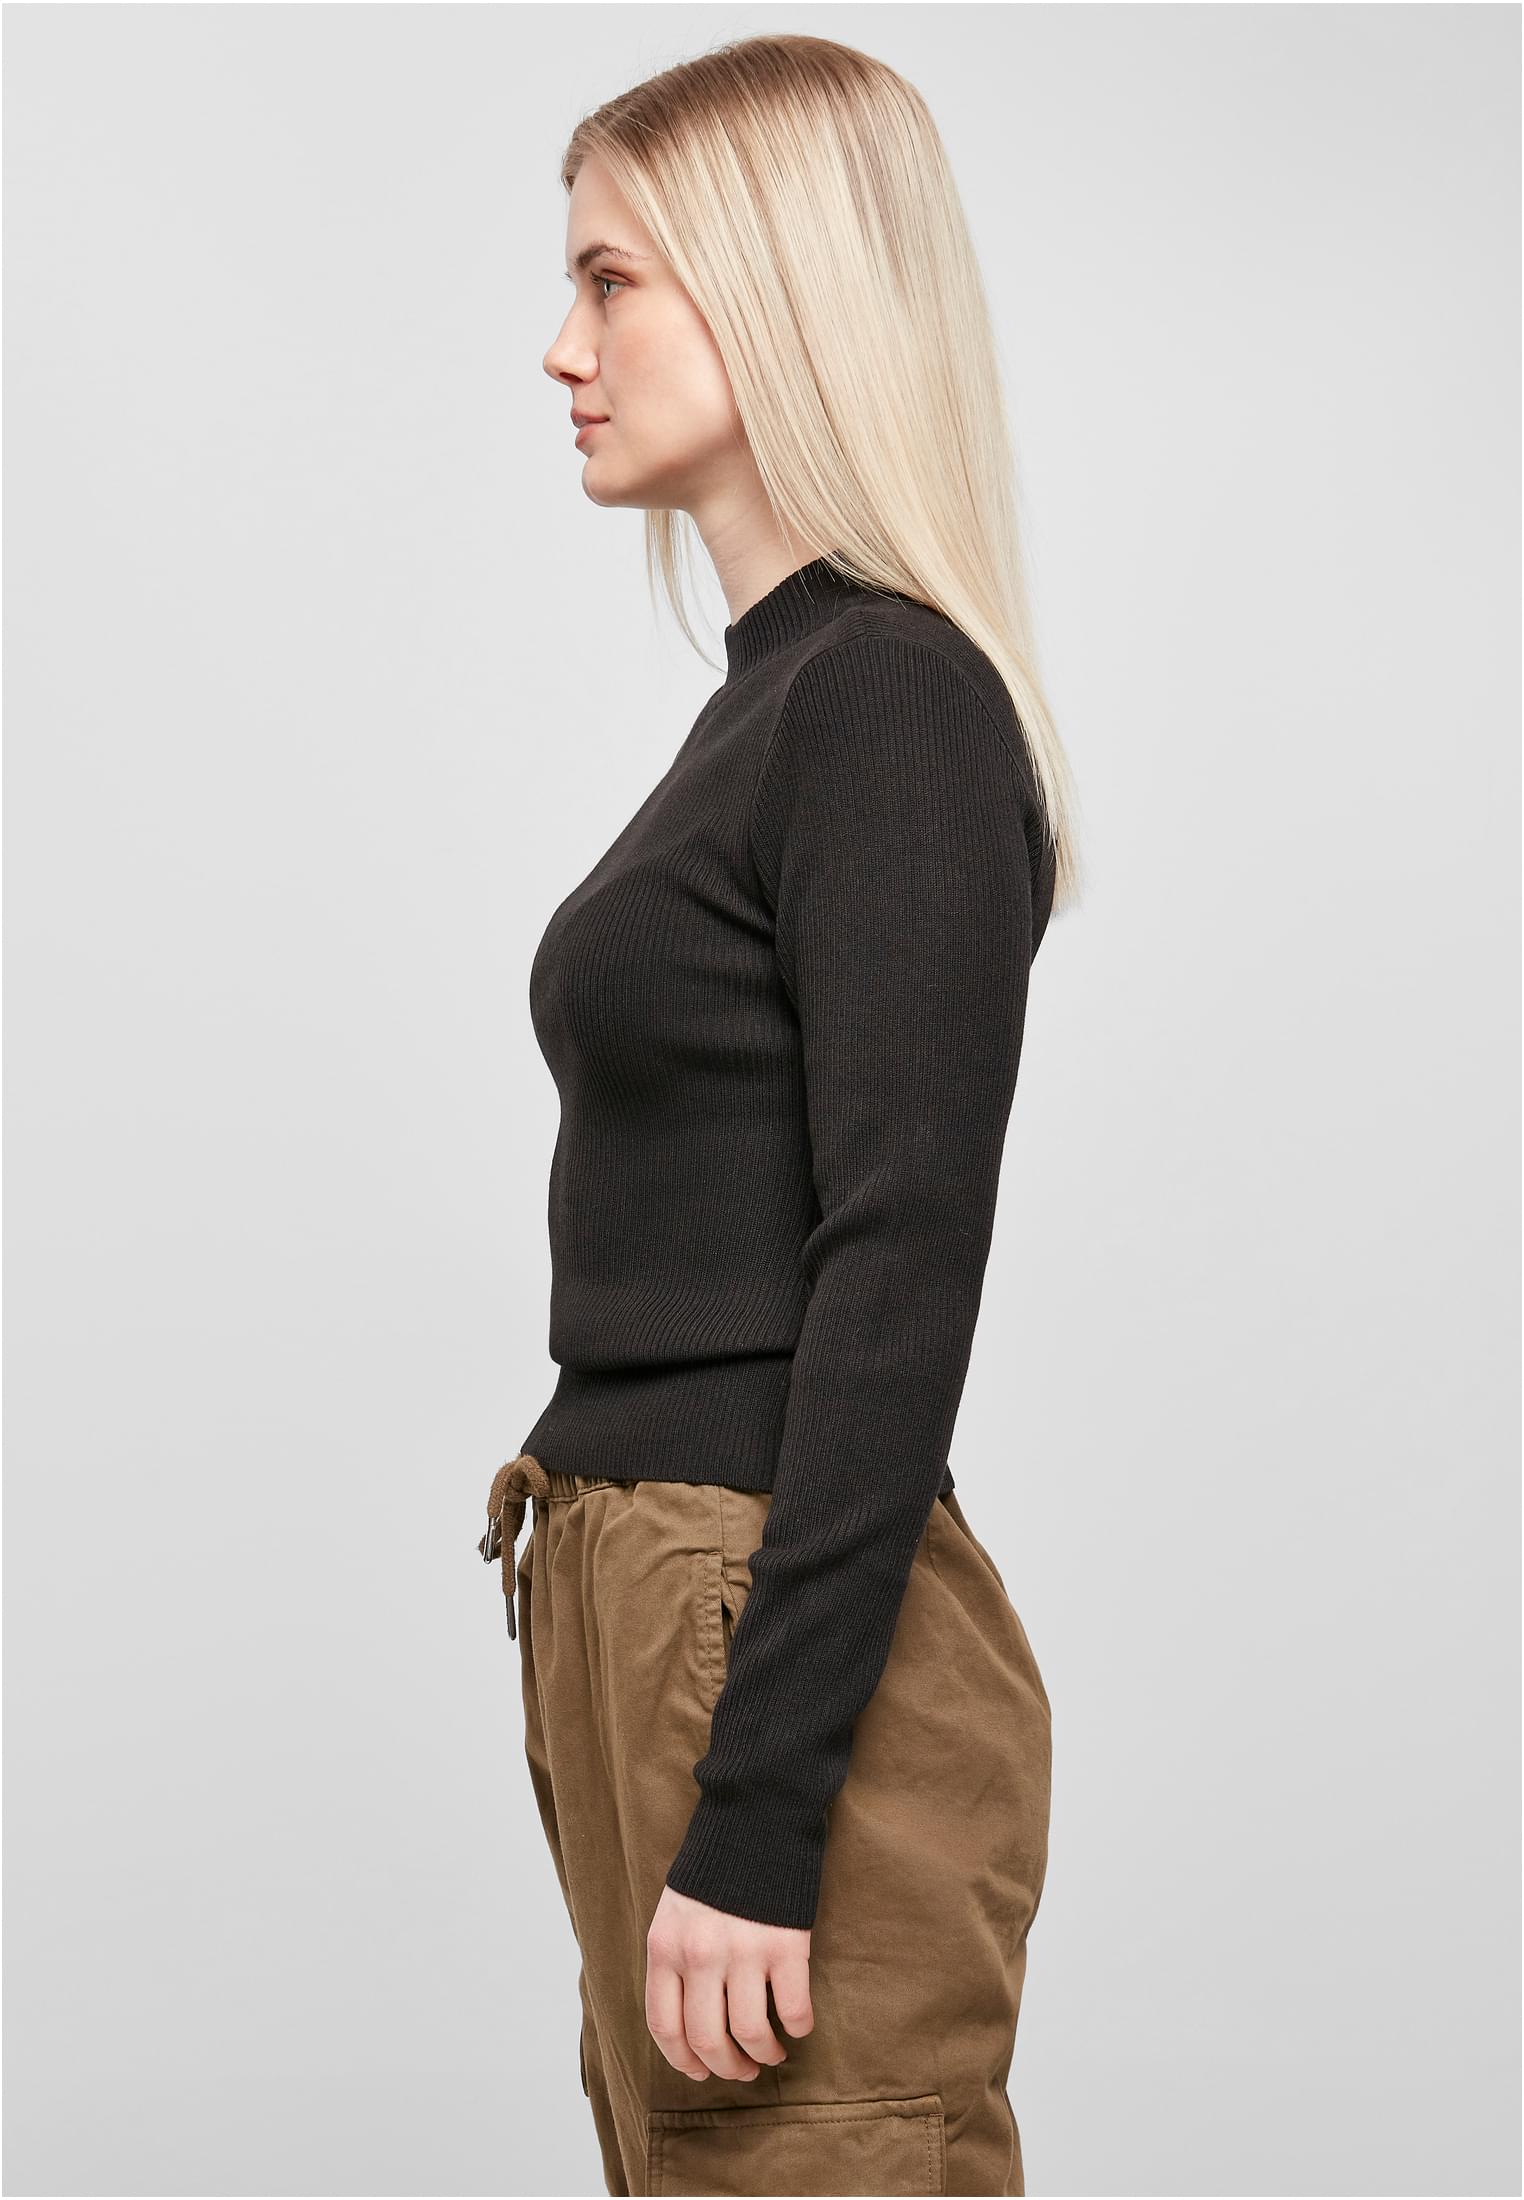 Damen Ladies Rib Knit Turtelneck Sweater in Farbe black